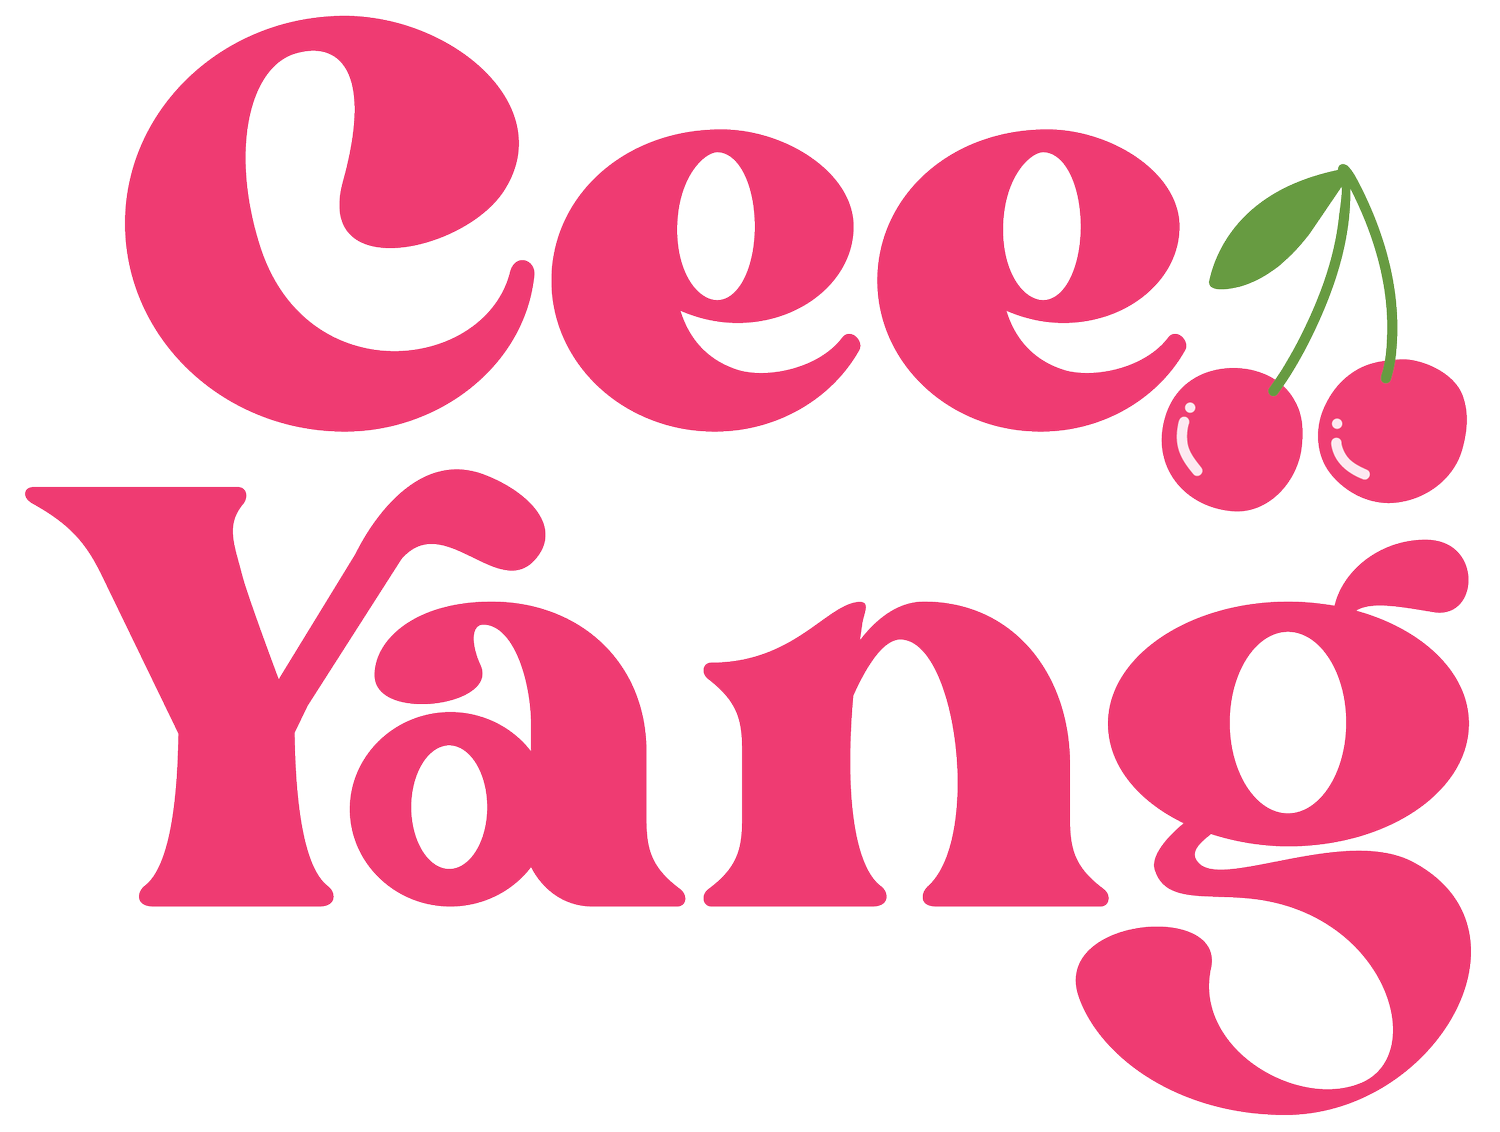 Cee Yang